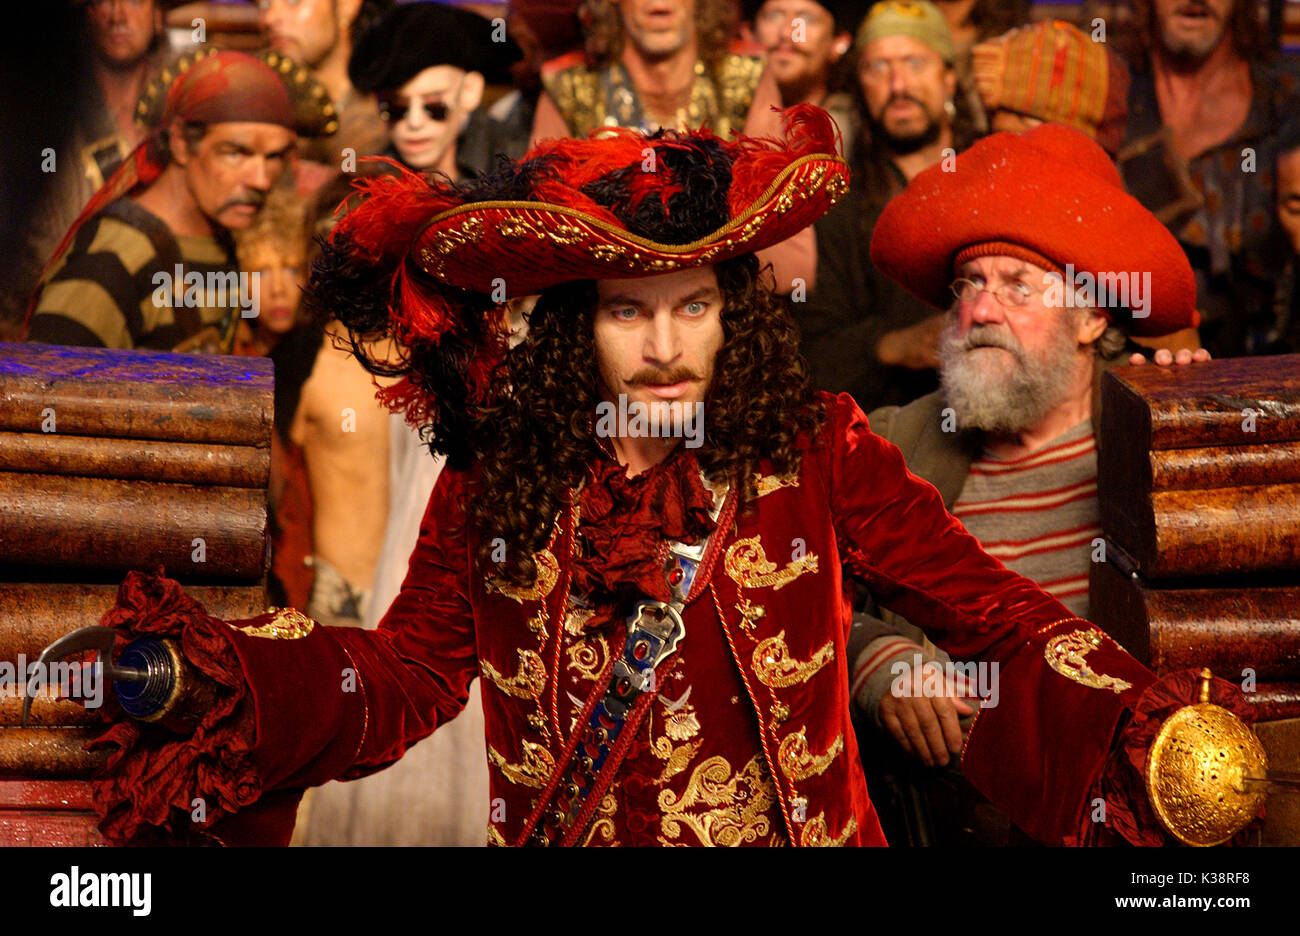 PETER PAN JASON ISAACS as Captain Hook, RICHARD BRIERS [right] as Stock  Photo - Alamy